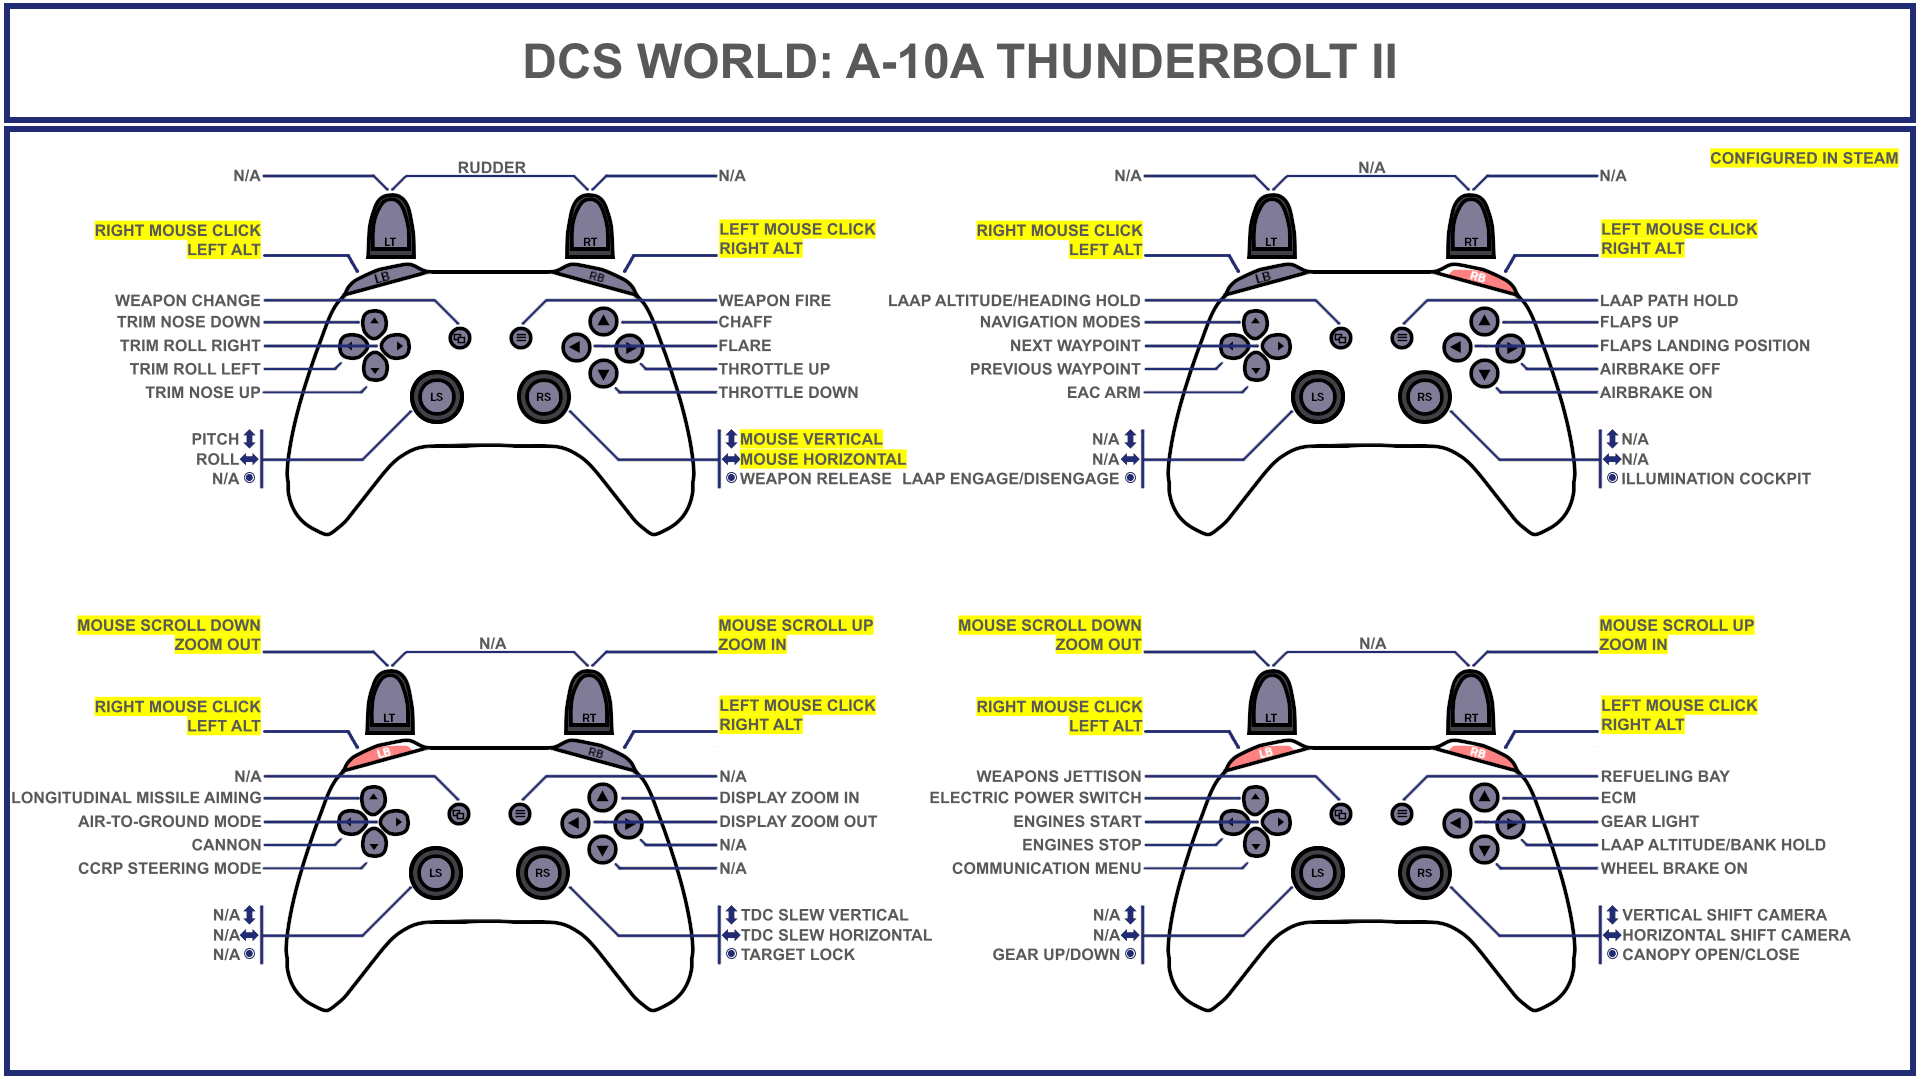 Tuuvas' Official A-10A Warthog Gamepad Controller Layout